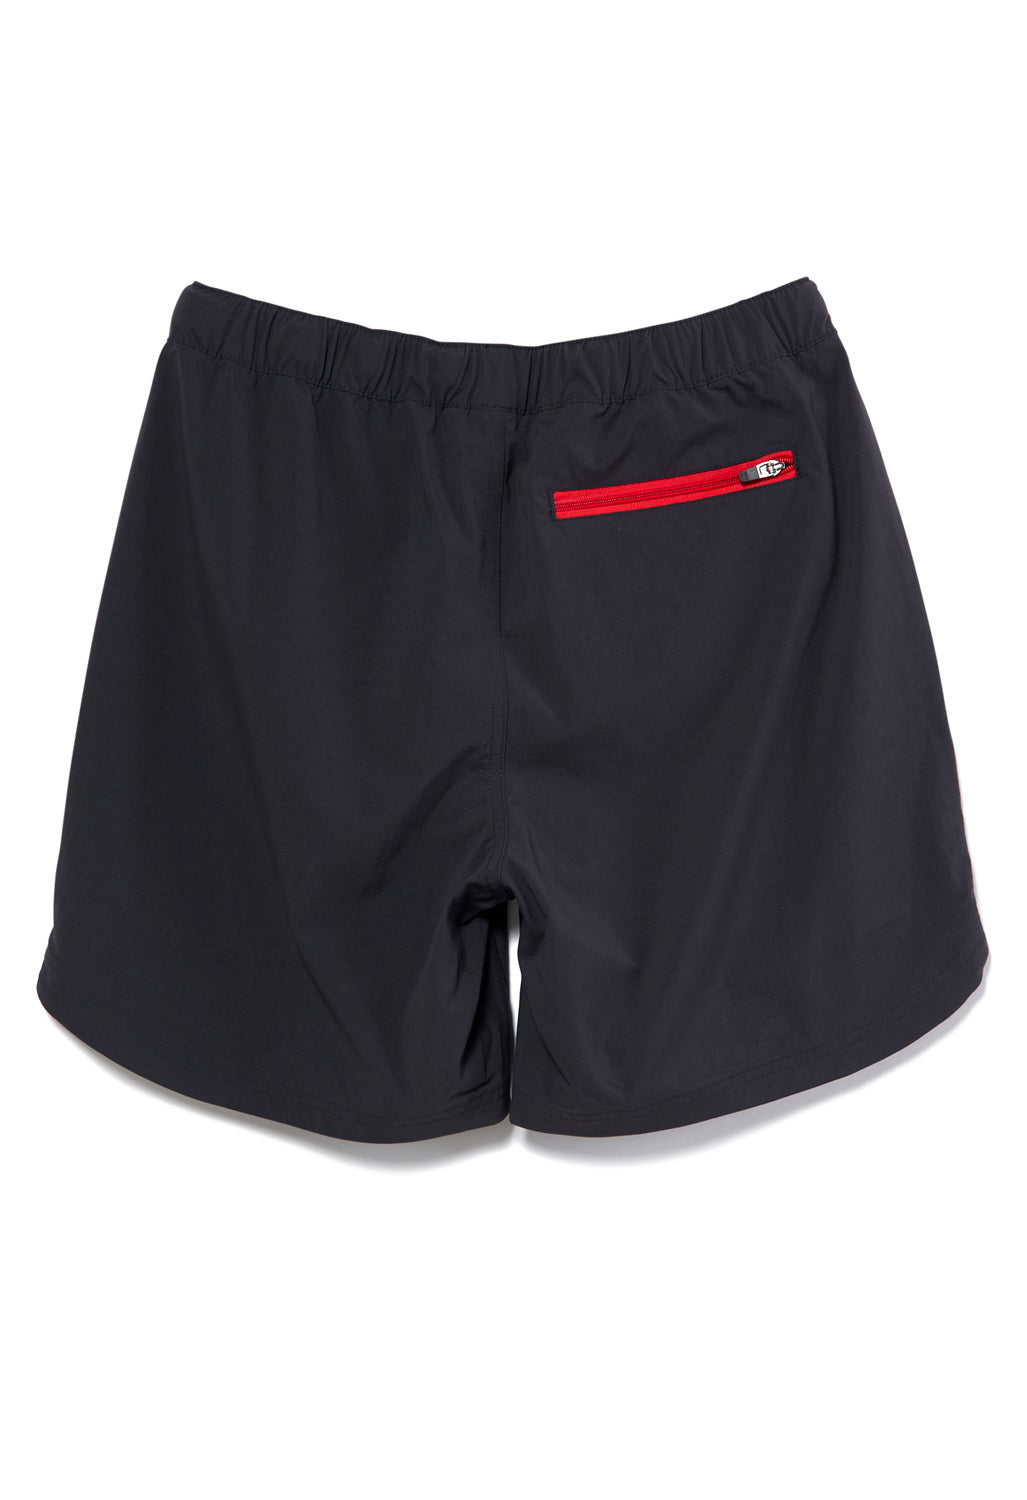 Topo Designs Men's River Shorts - Black